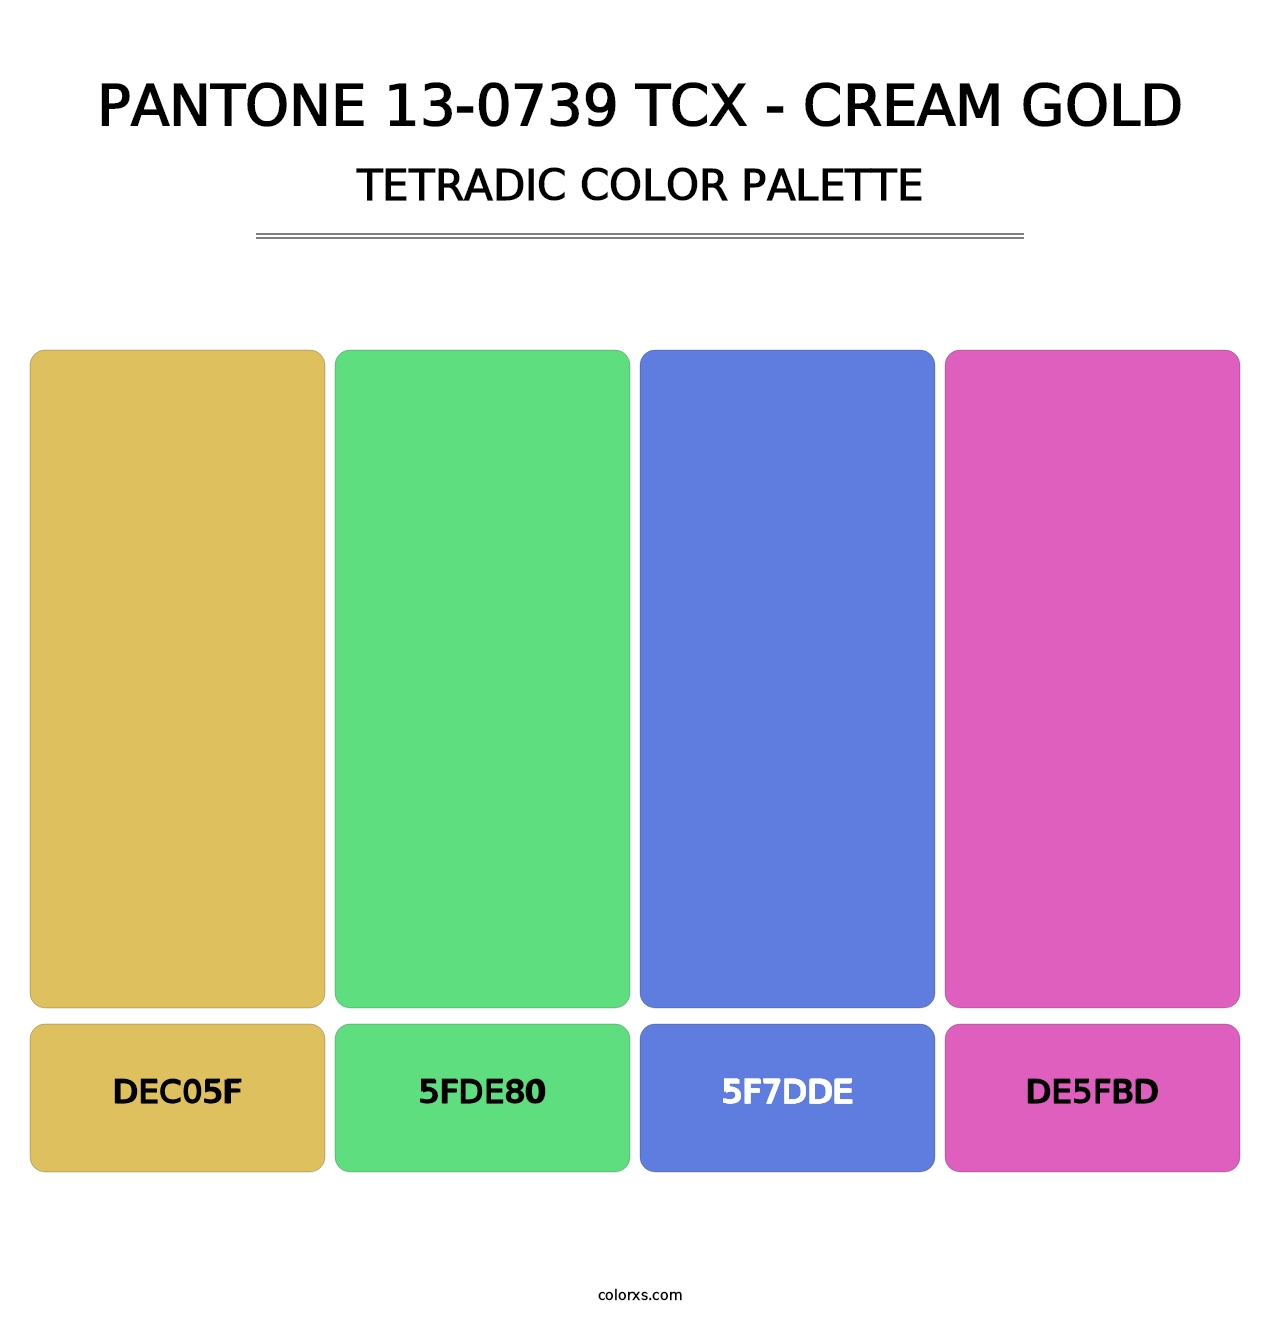 PANTONE 13-0739 TCX - Cream Gold - Tetradic Color Palette